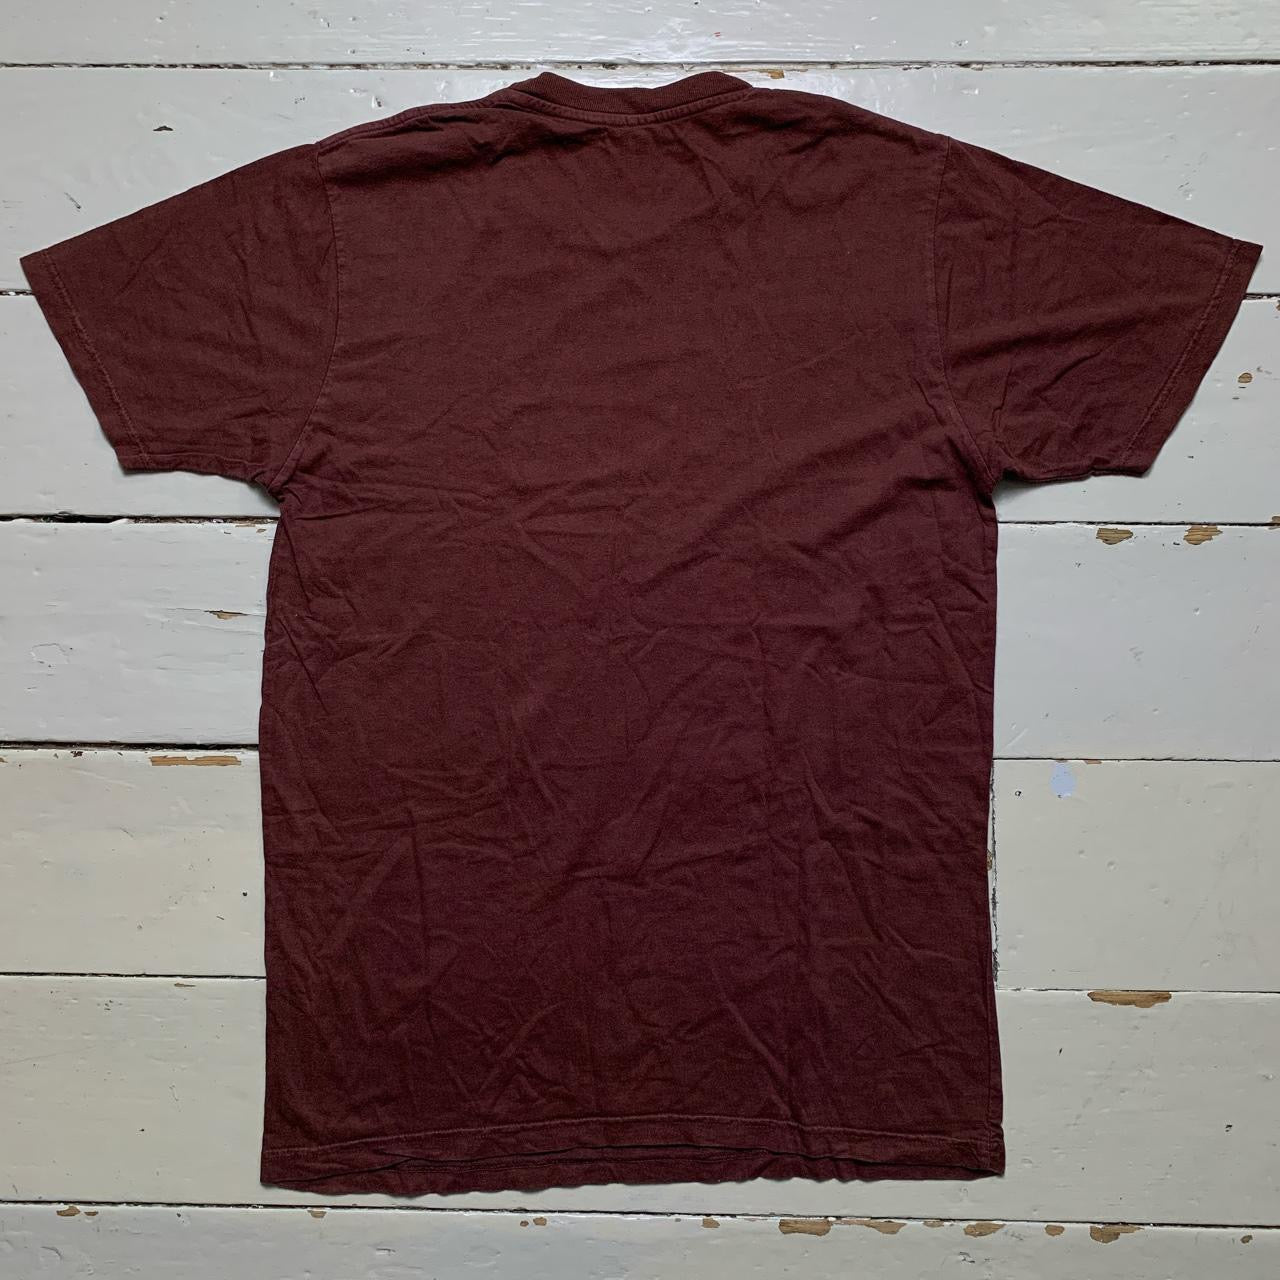 2761 Vintage Dragon T Shirt Brown (Medium)